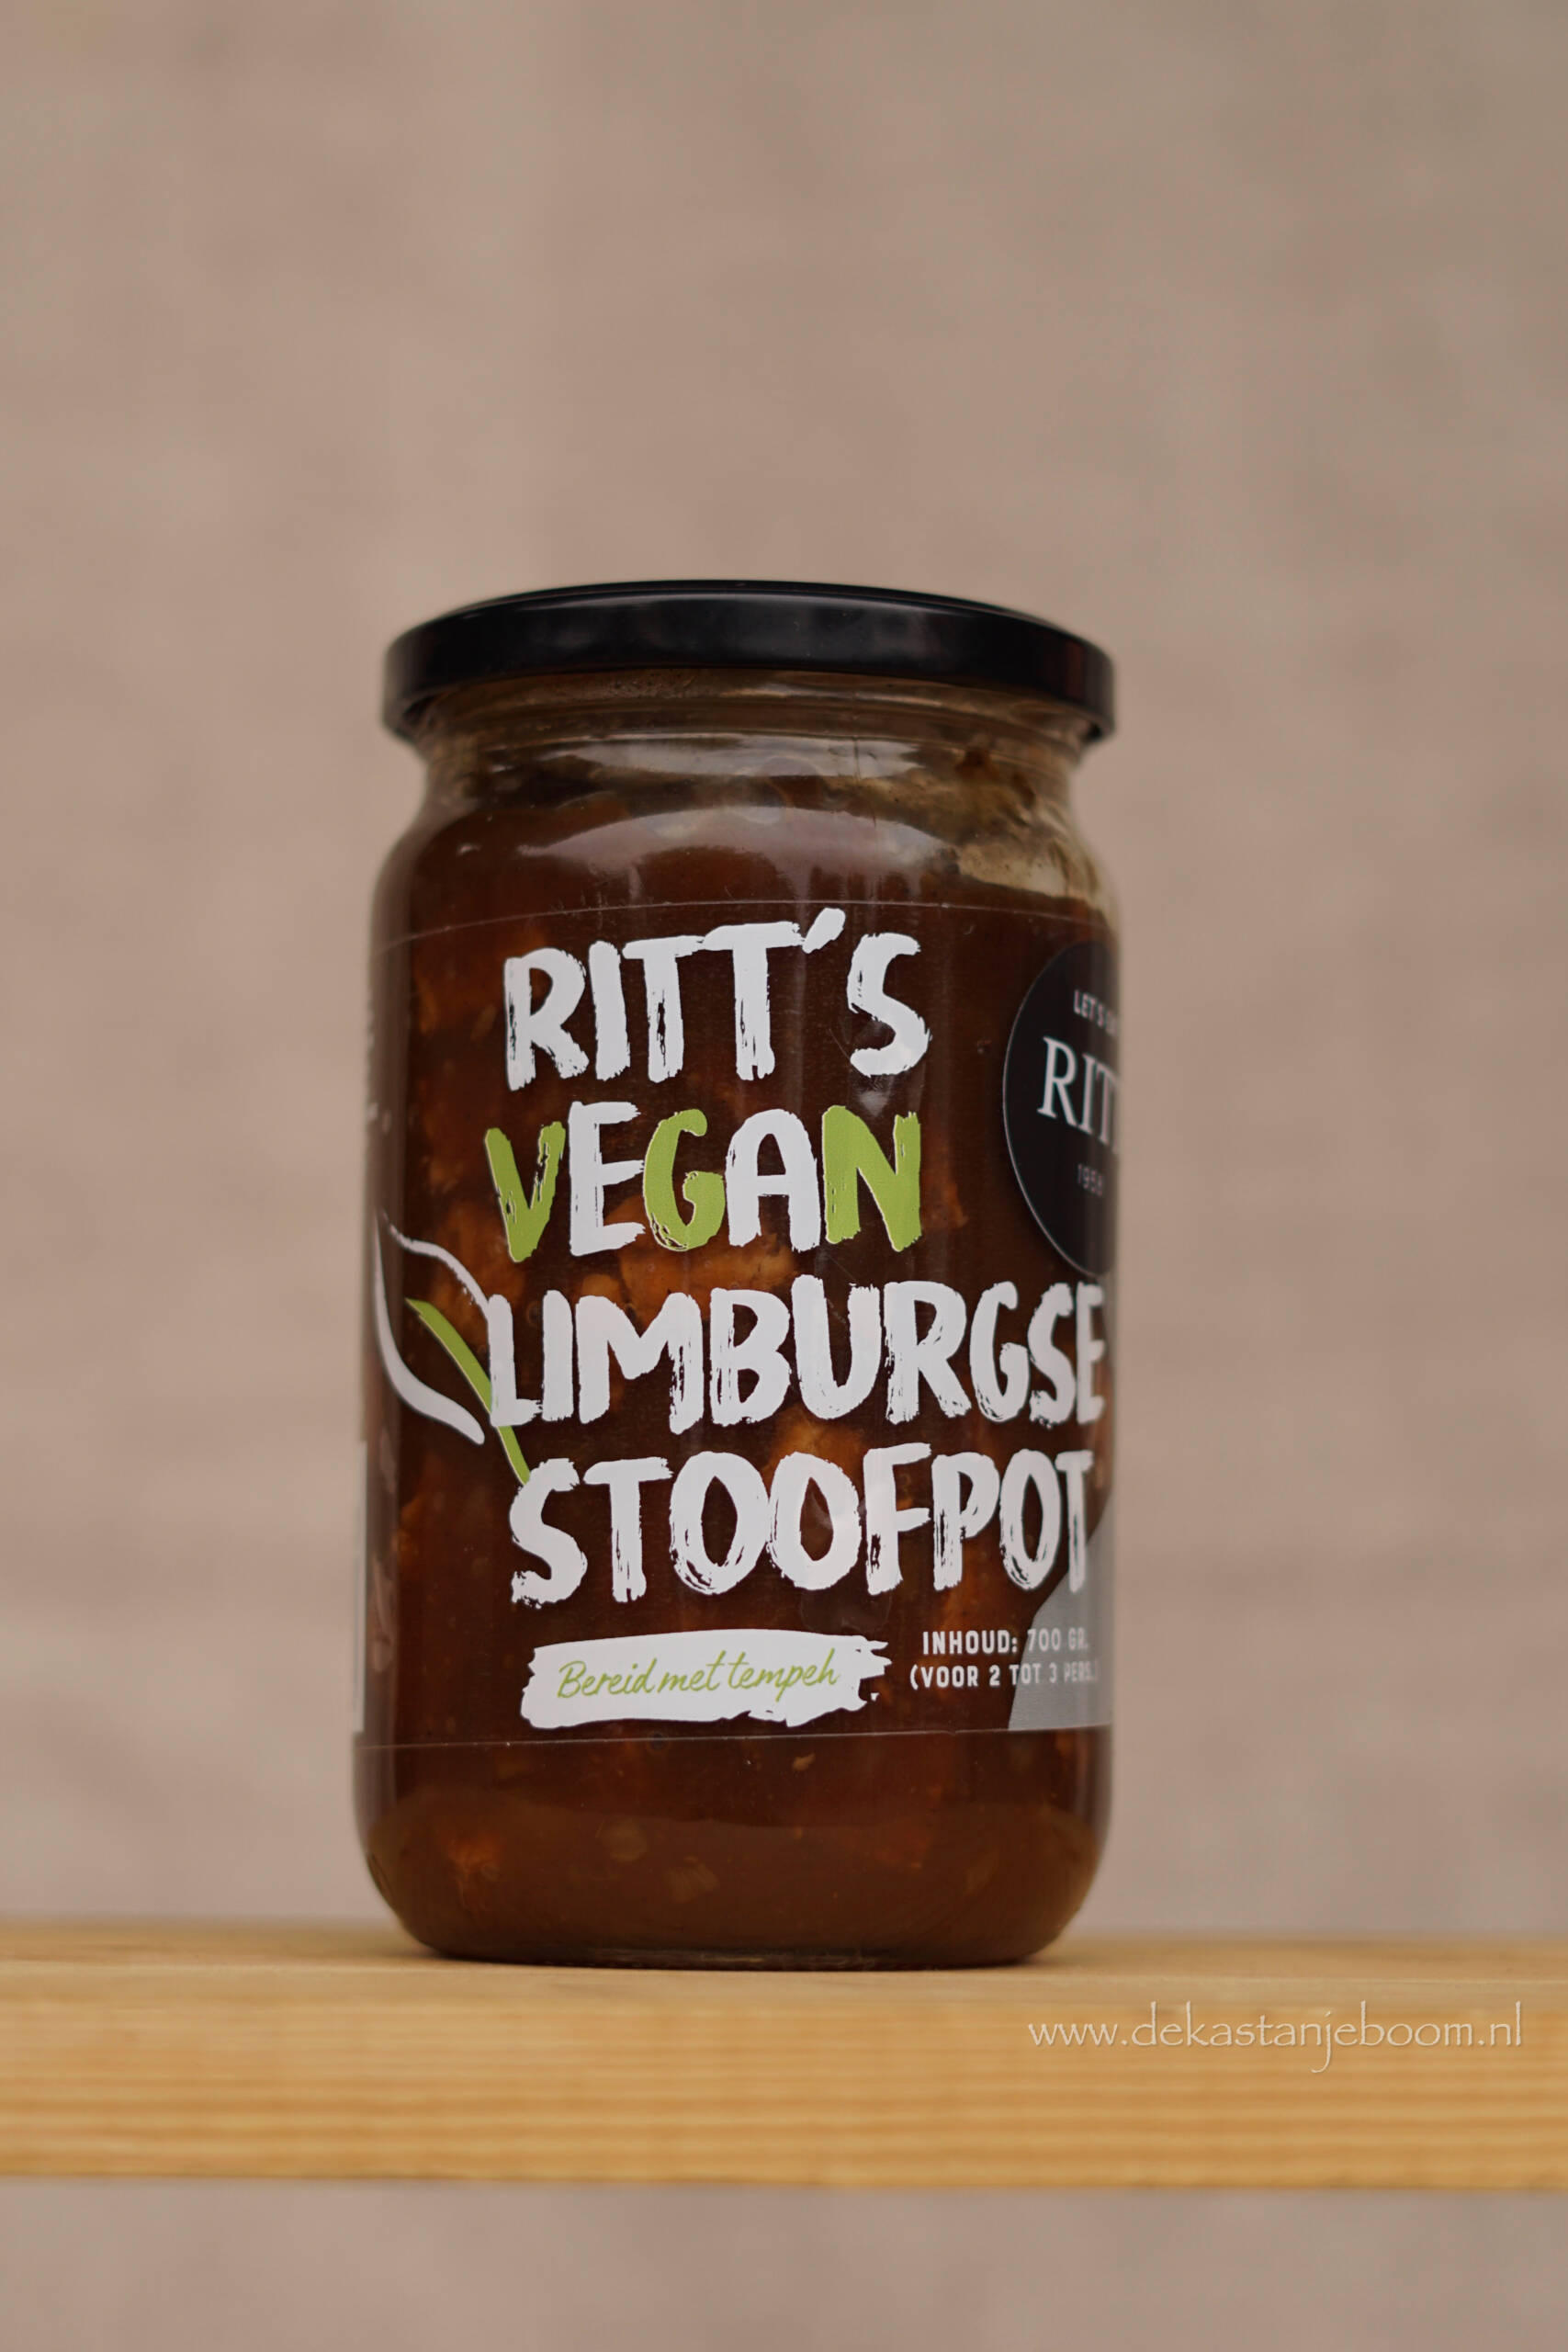 Ritt's vegan Limburgse stoofpot